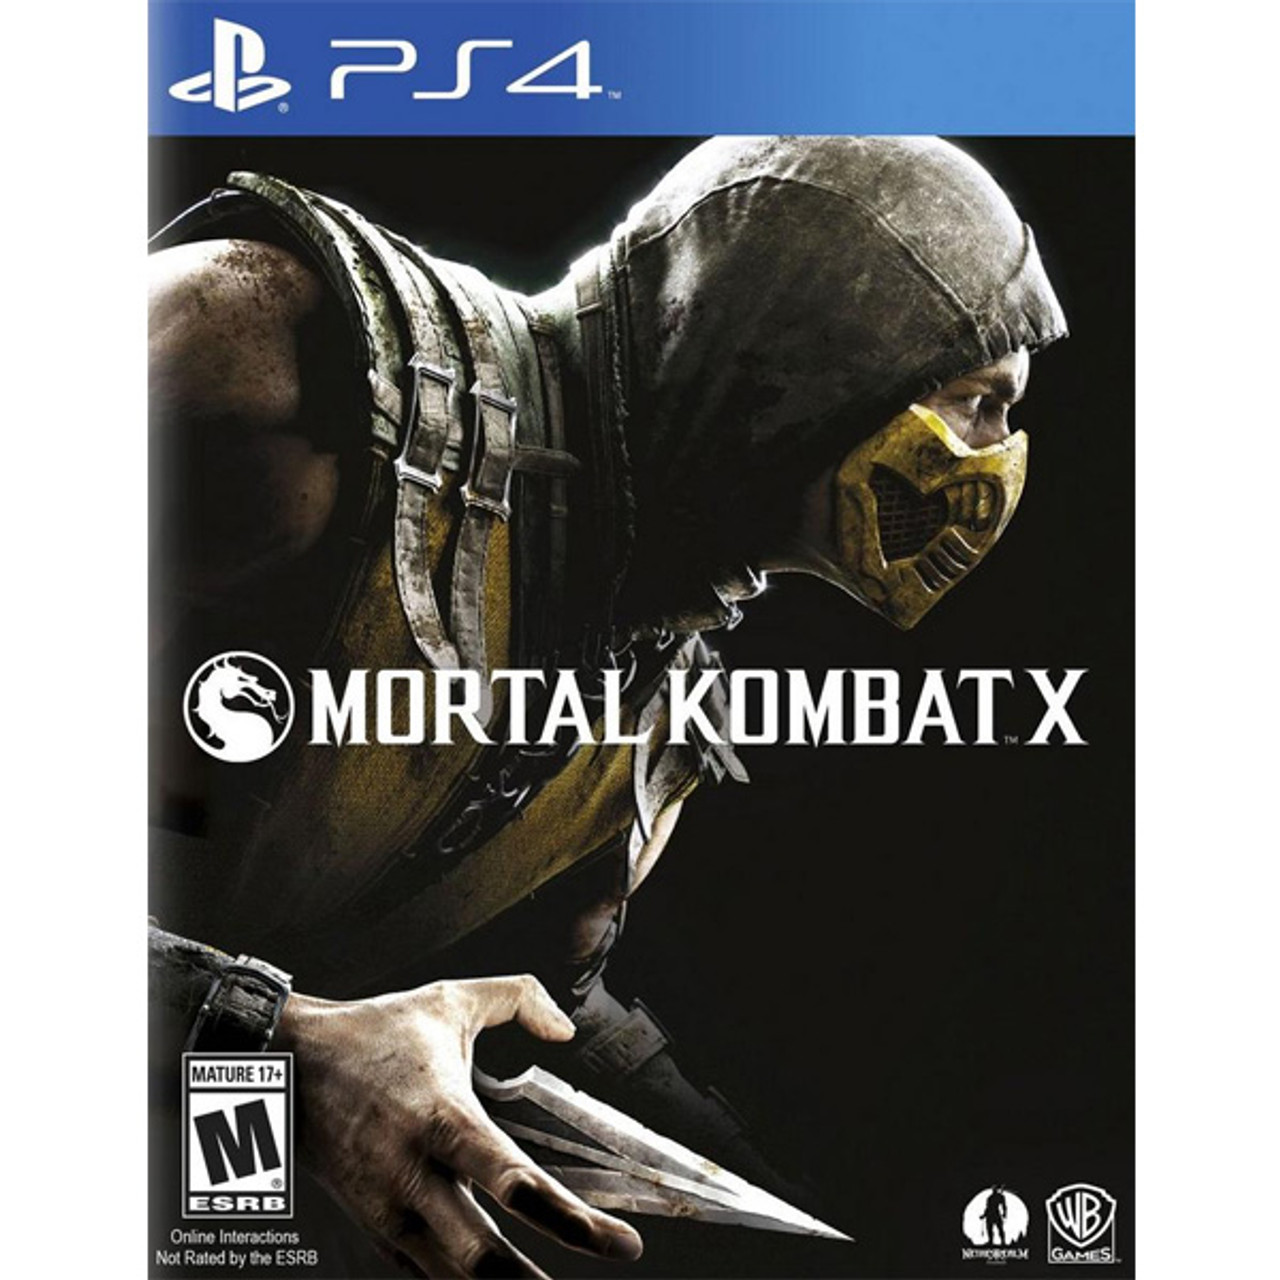 Play Ultimate Mortal Kombat 4 Online - Nintendo (NES) Classic Games Online